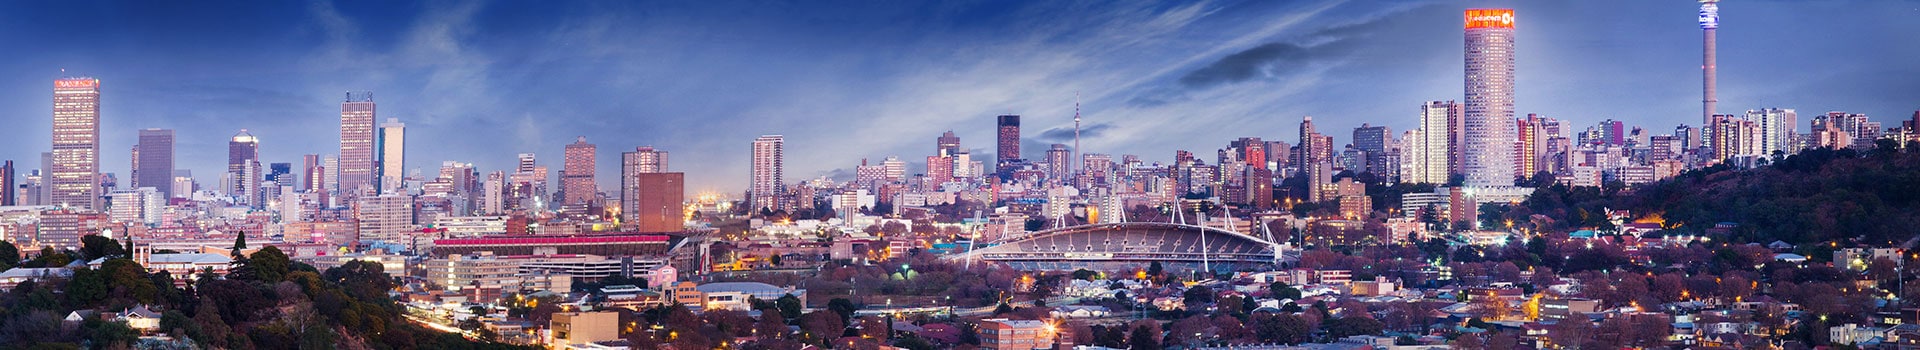 Porto - Johannesburg